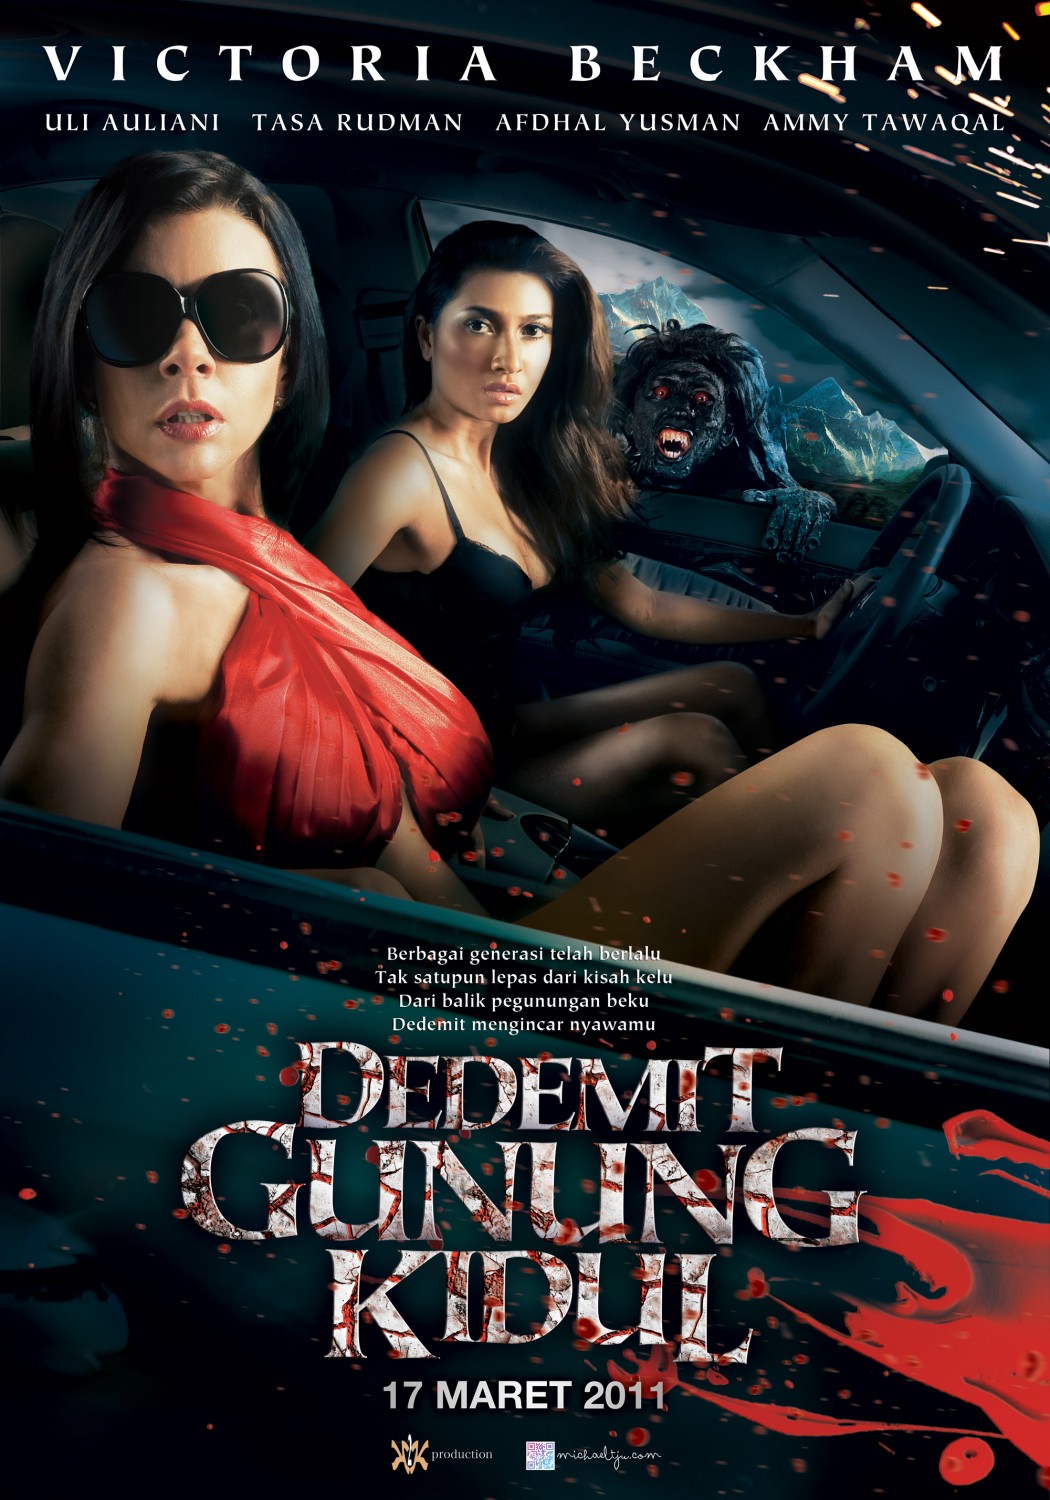 Extra Large Movie Poster Image for Dedemit gunung kidul 